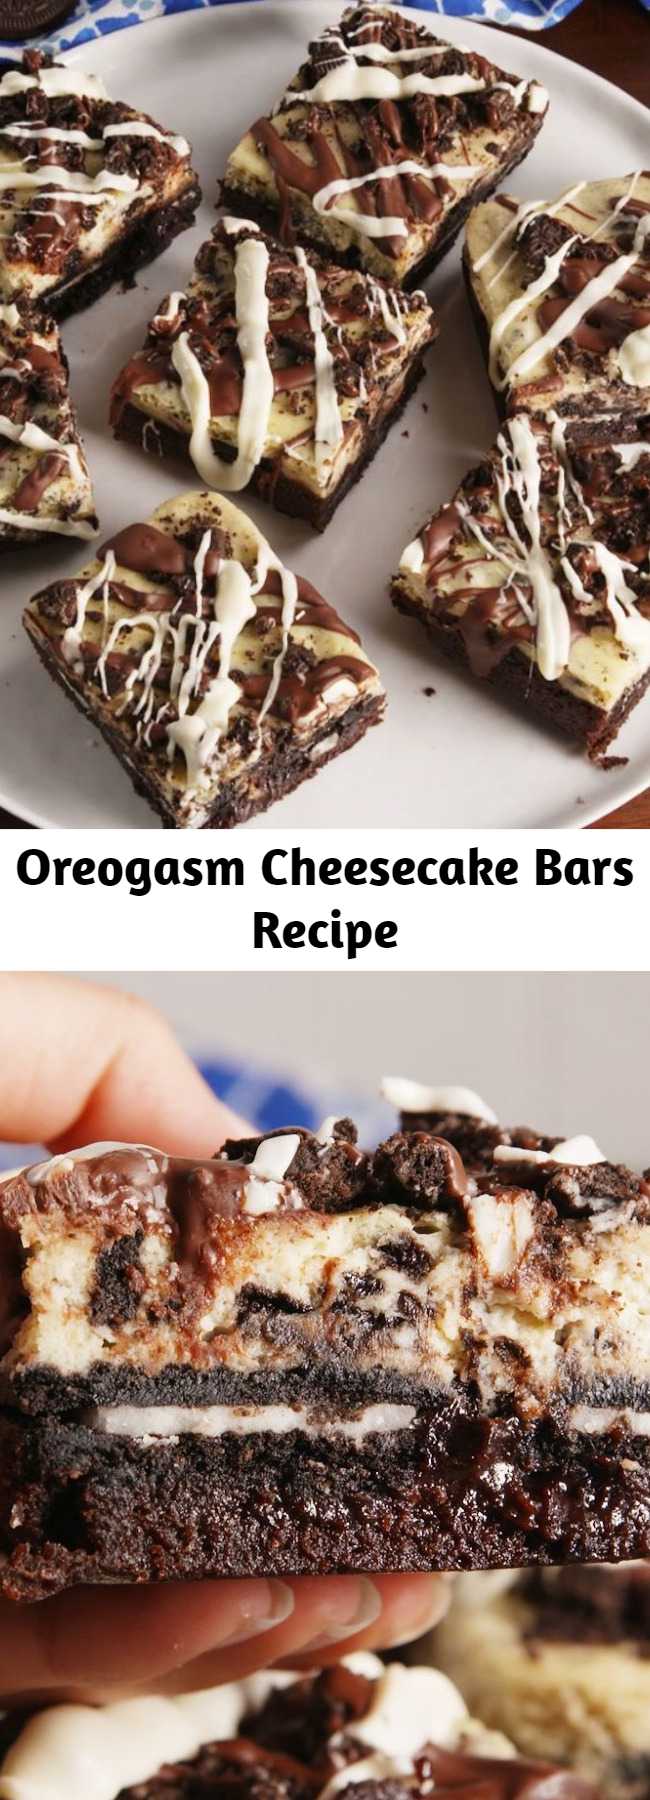 Oreogasm Cheesecake Bars Recipe